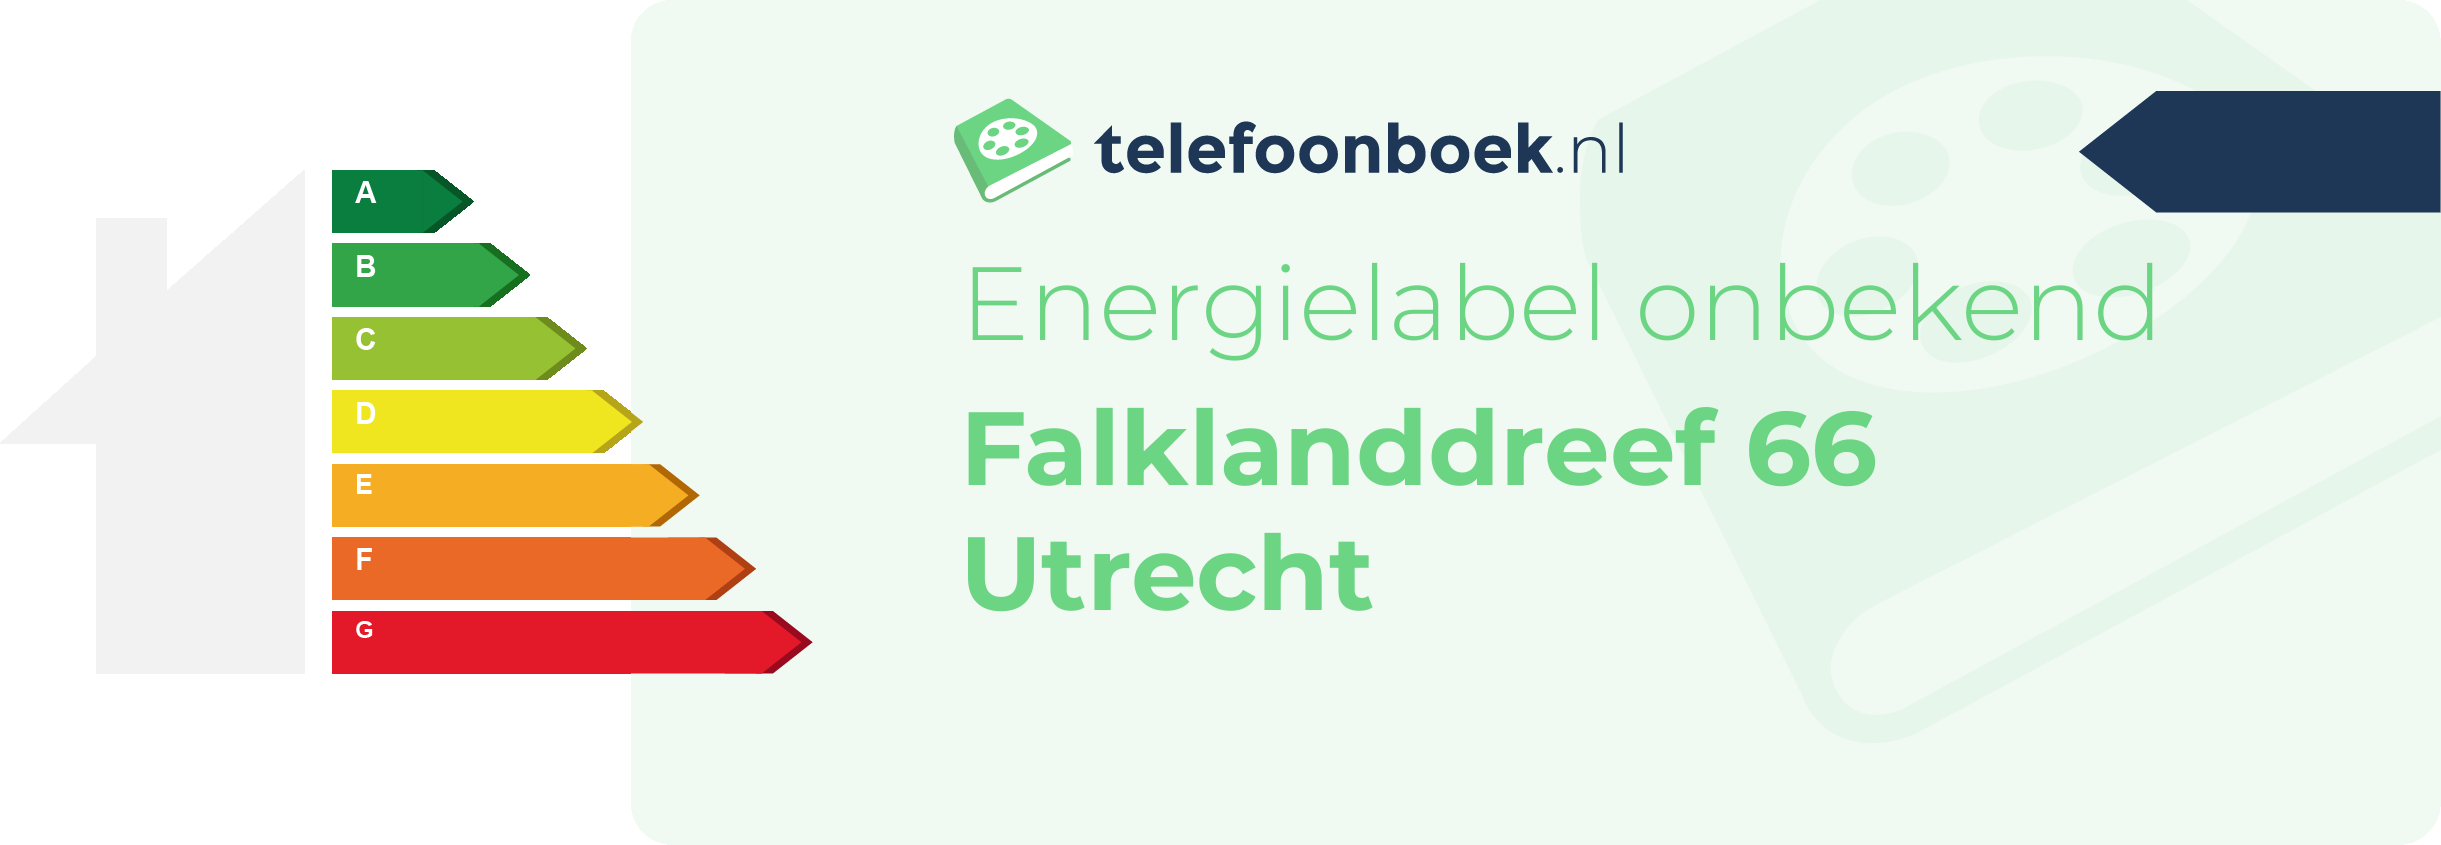 Energielabel Falklanddreef 66 Utrecht